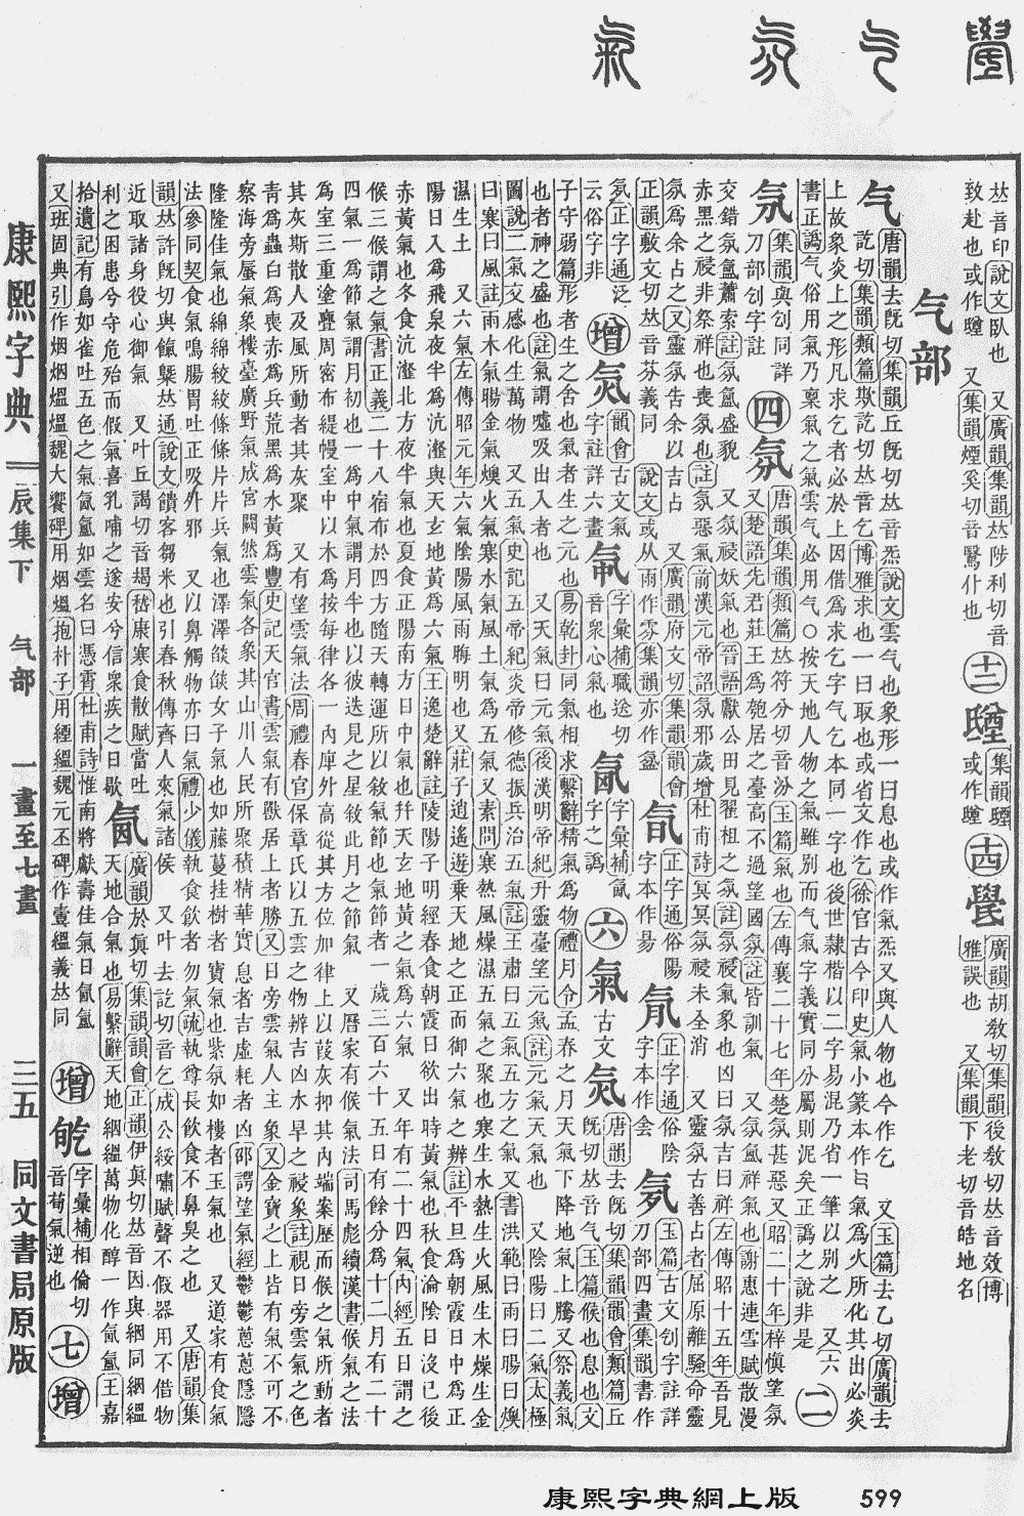 氣 qì dans le dictionnaire de l'empereur Kangxi